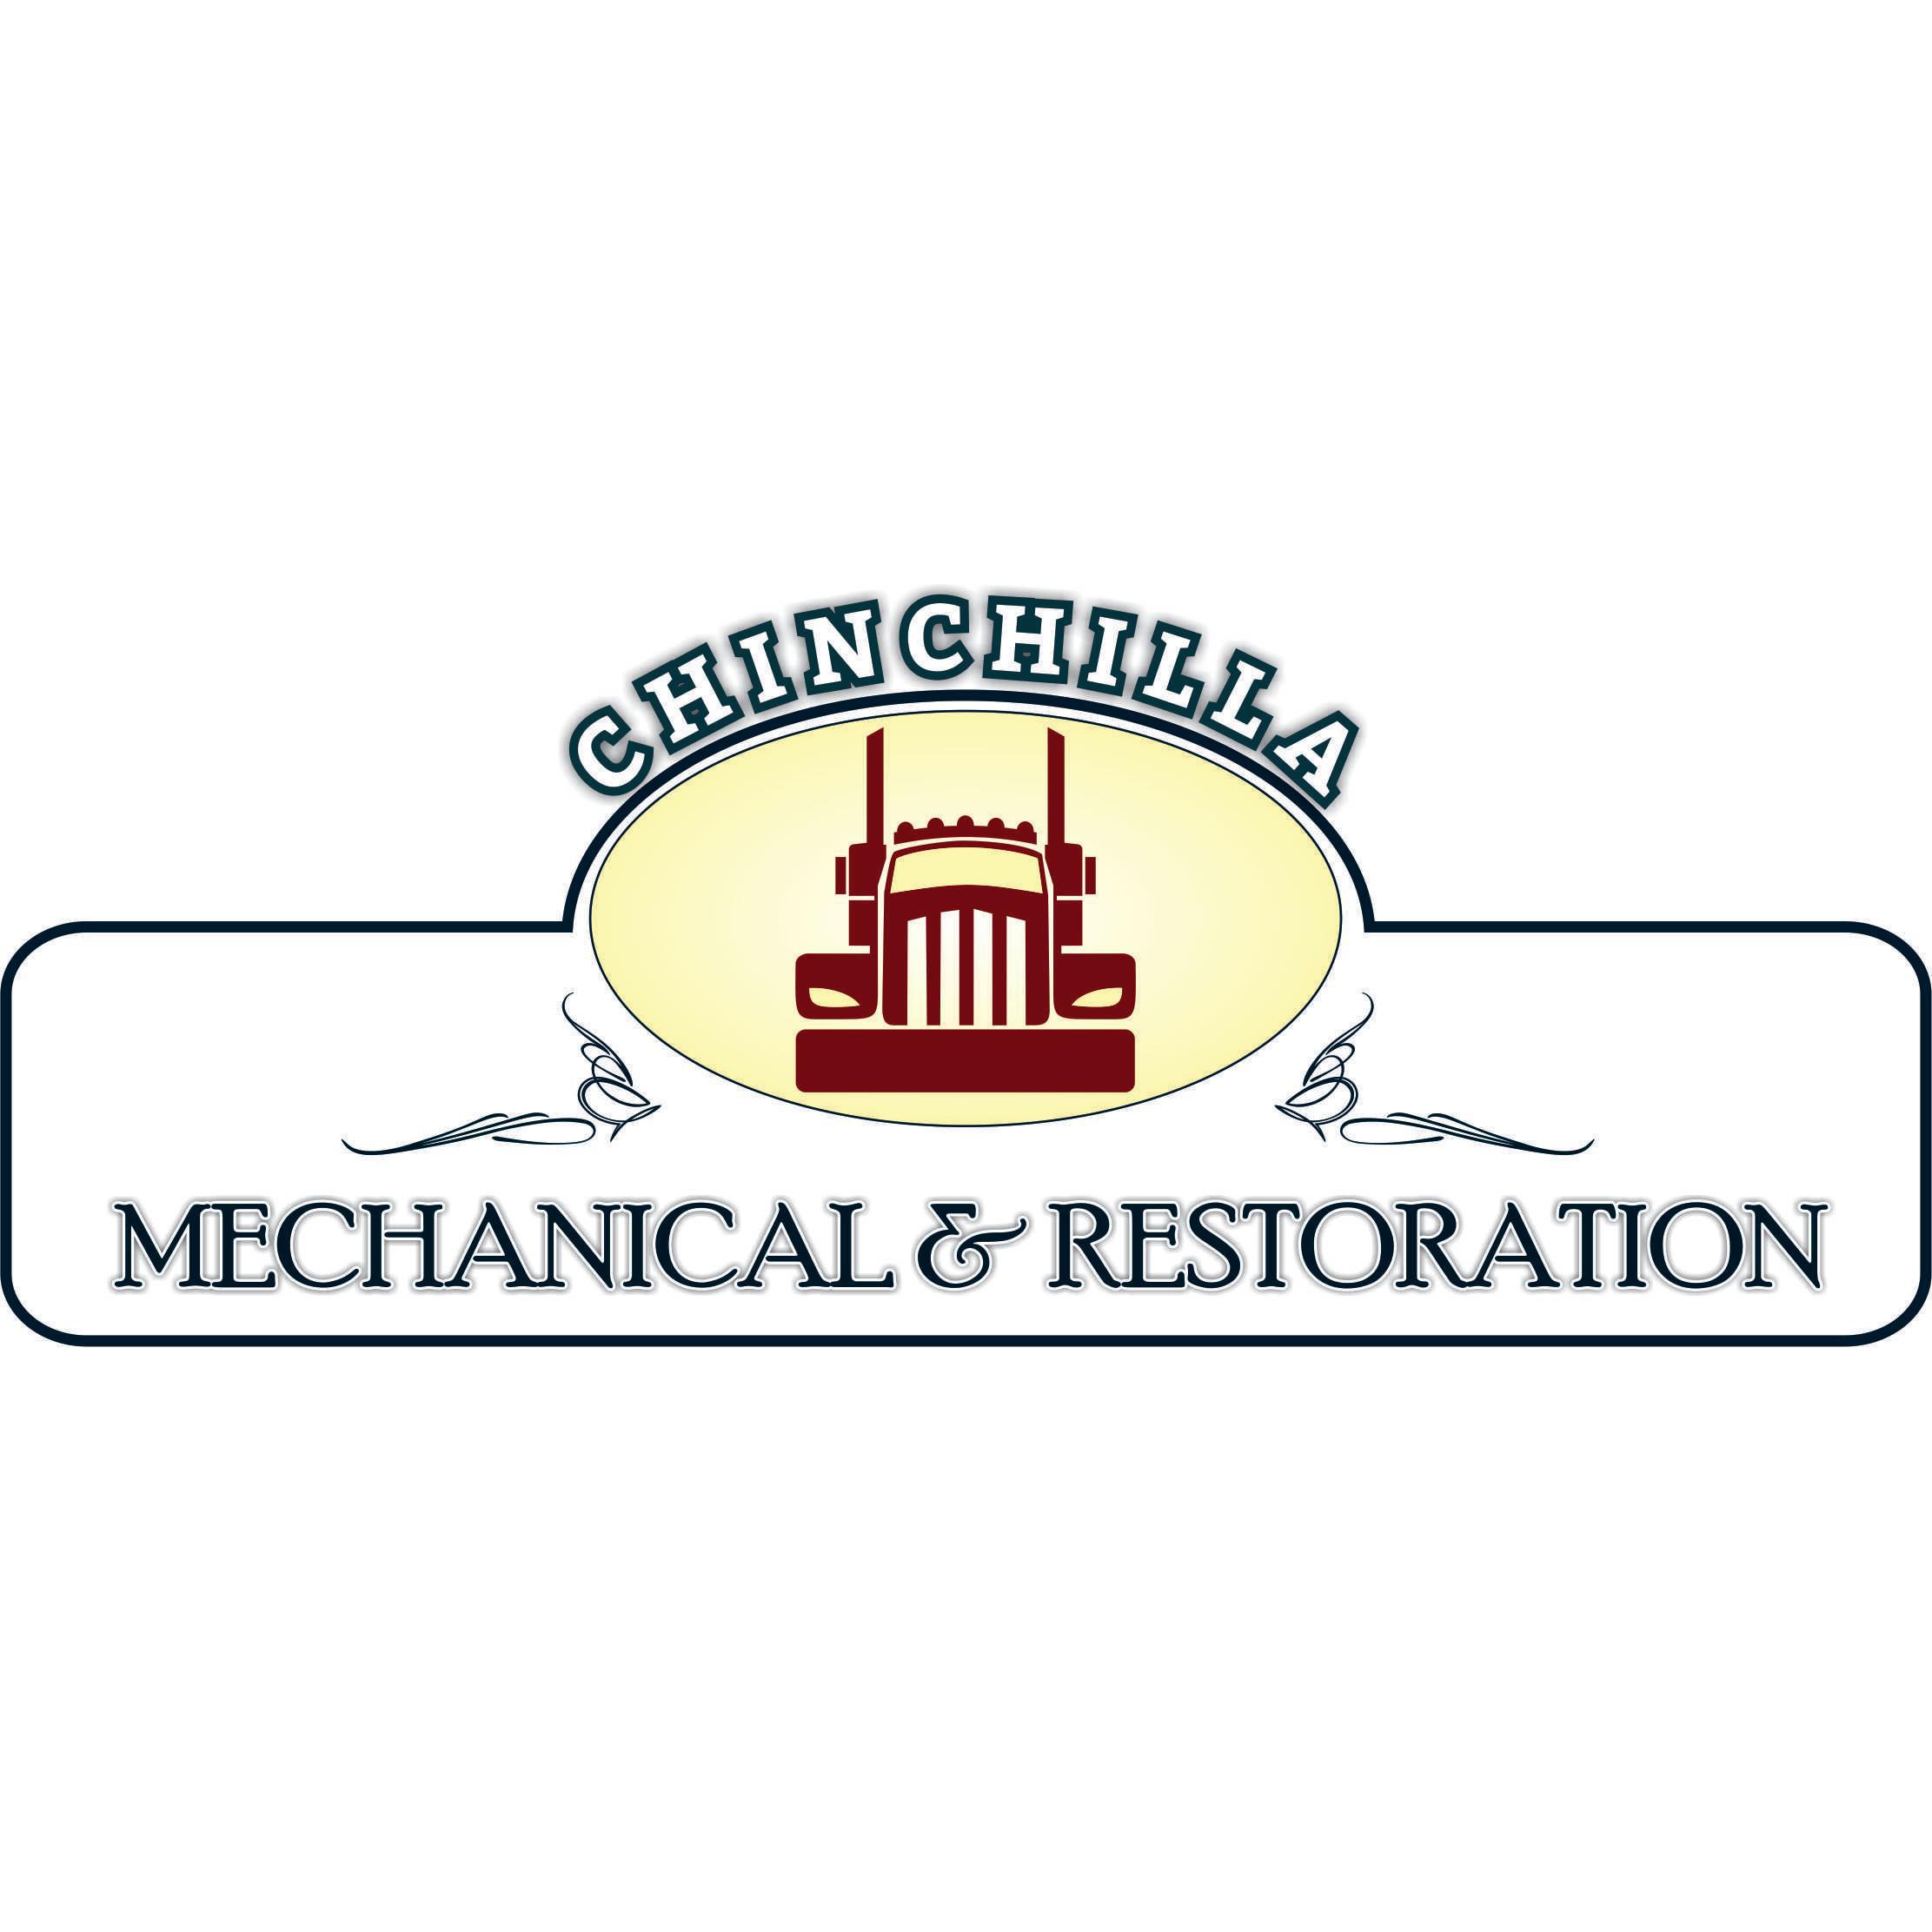 Chinchilla Mechanical and Restoration - Chinchilla, QLD 4413 - 0429 627 548 | ShowMeLocal.com